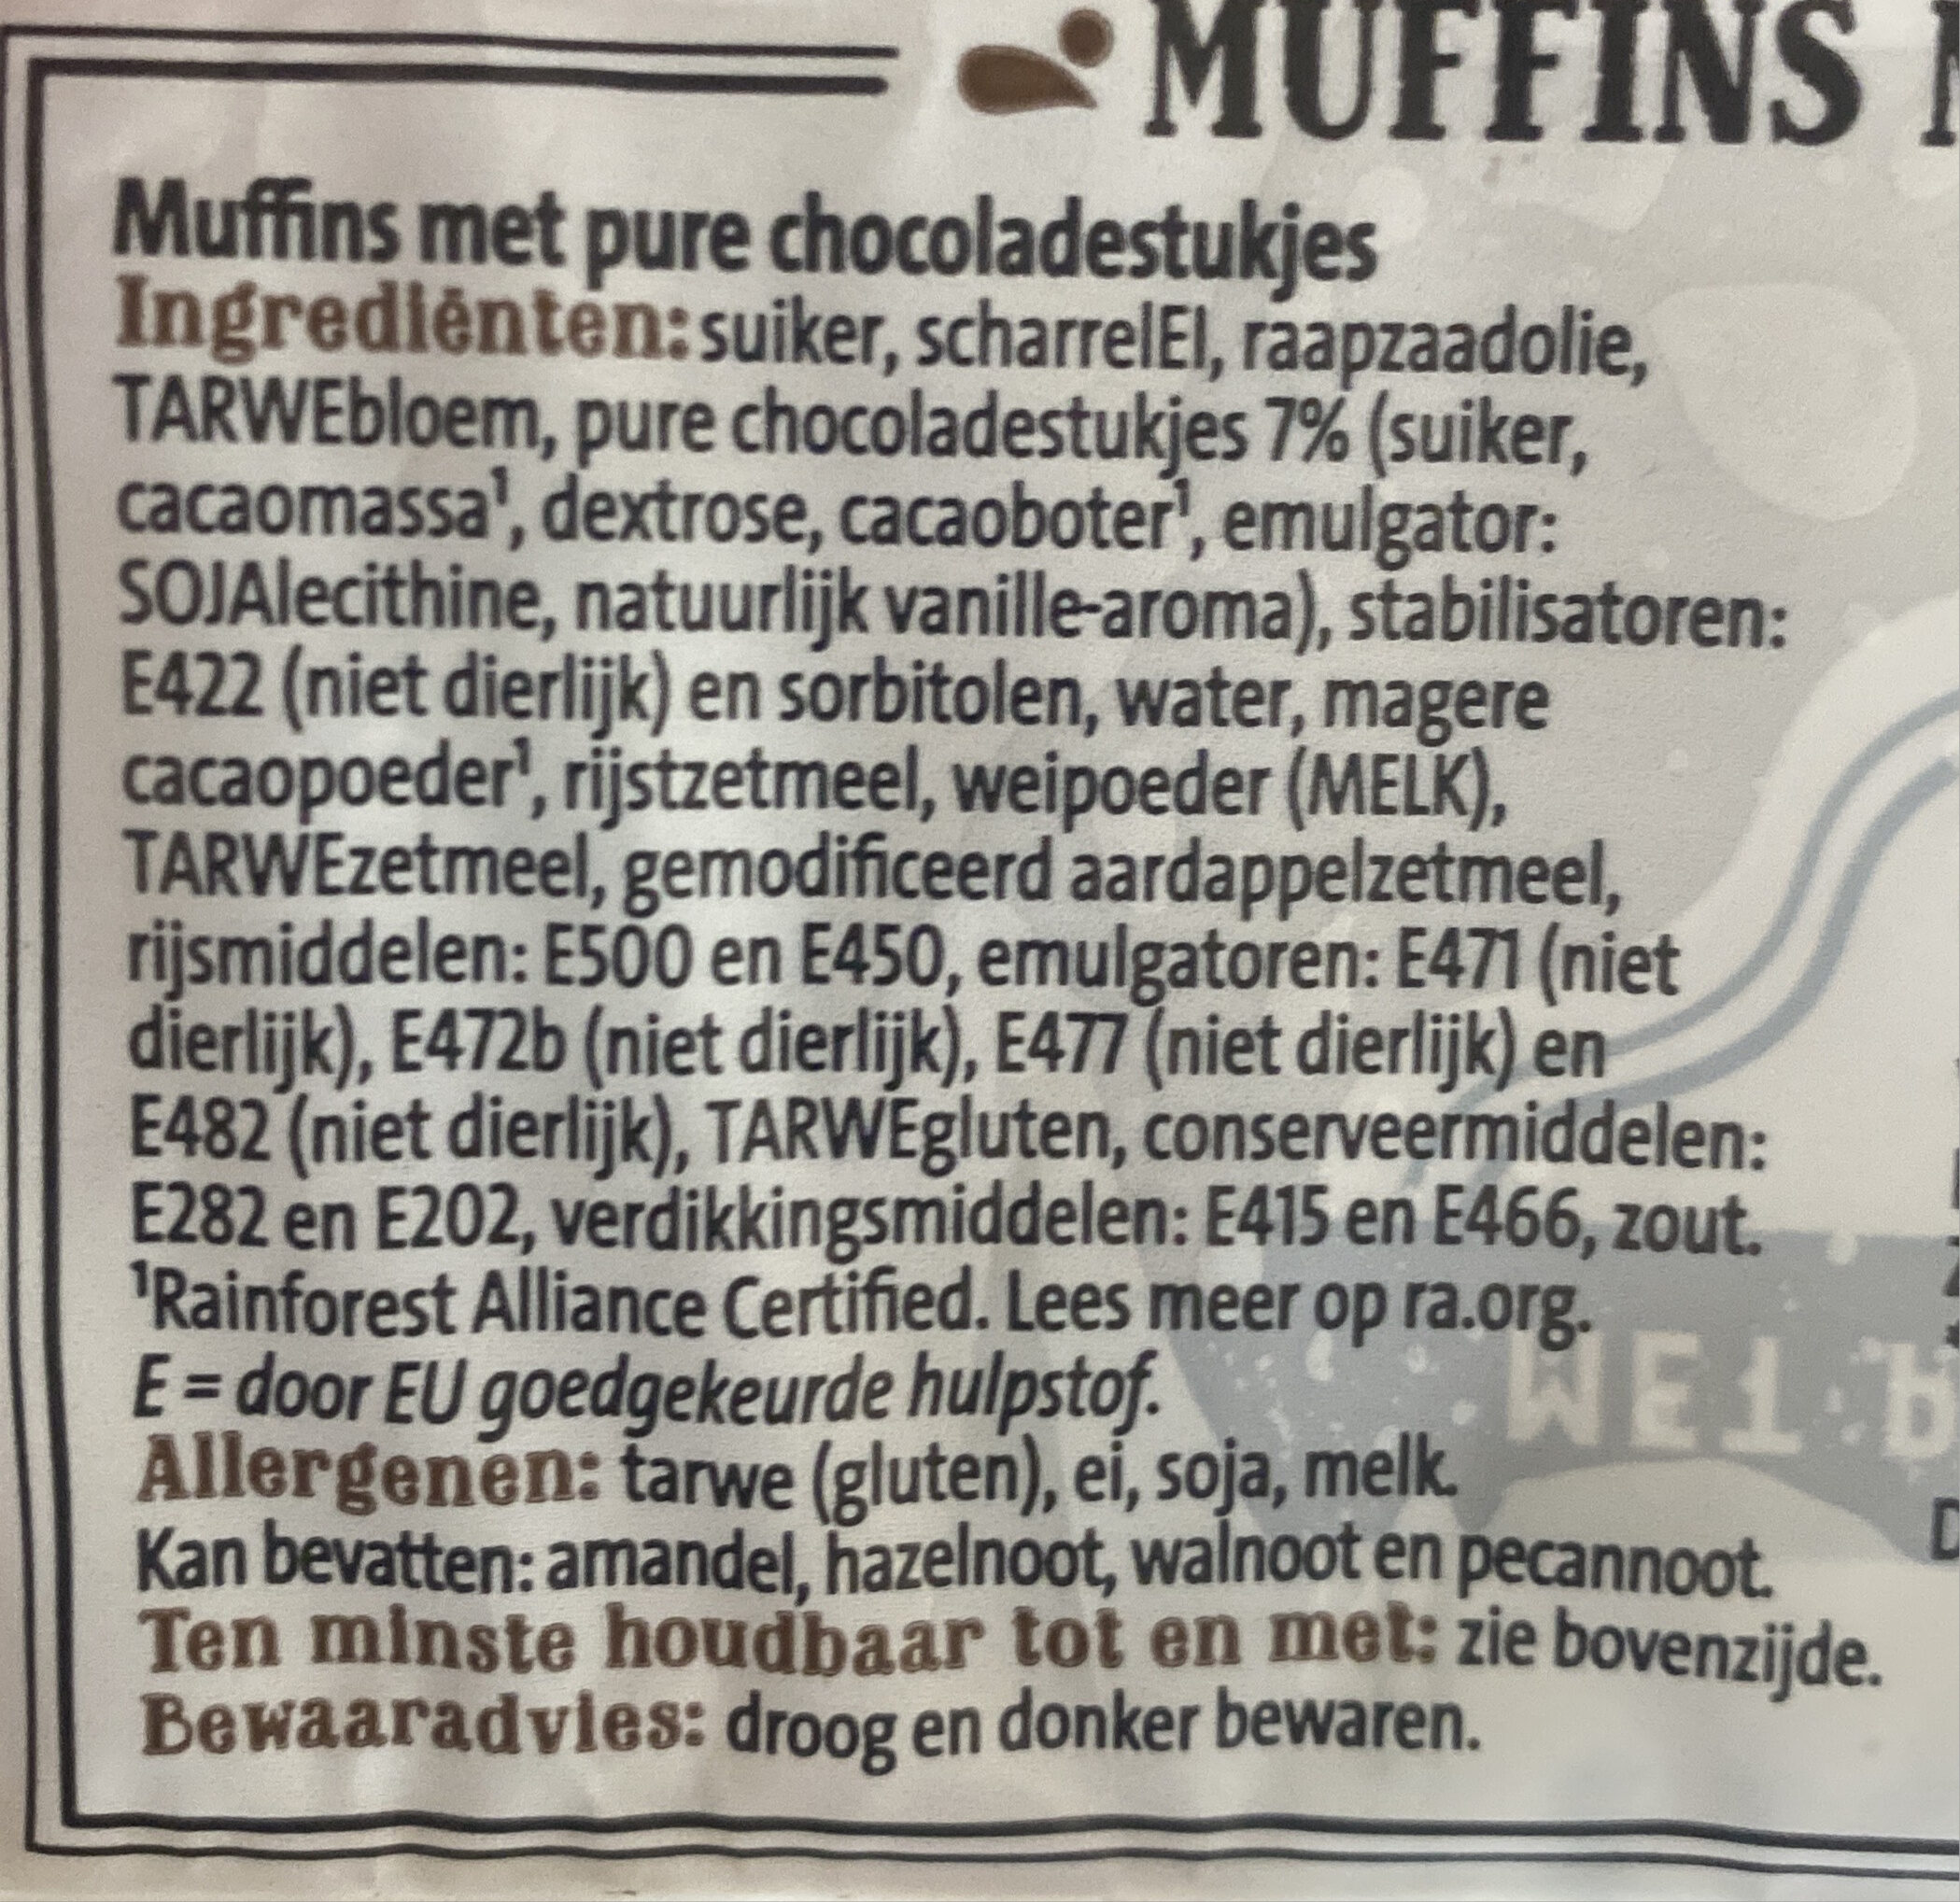 Muffins met pure chocolade - Ingredients